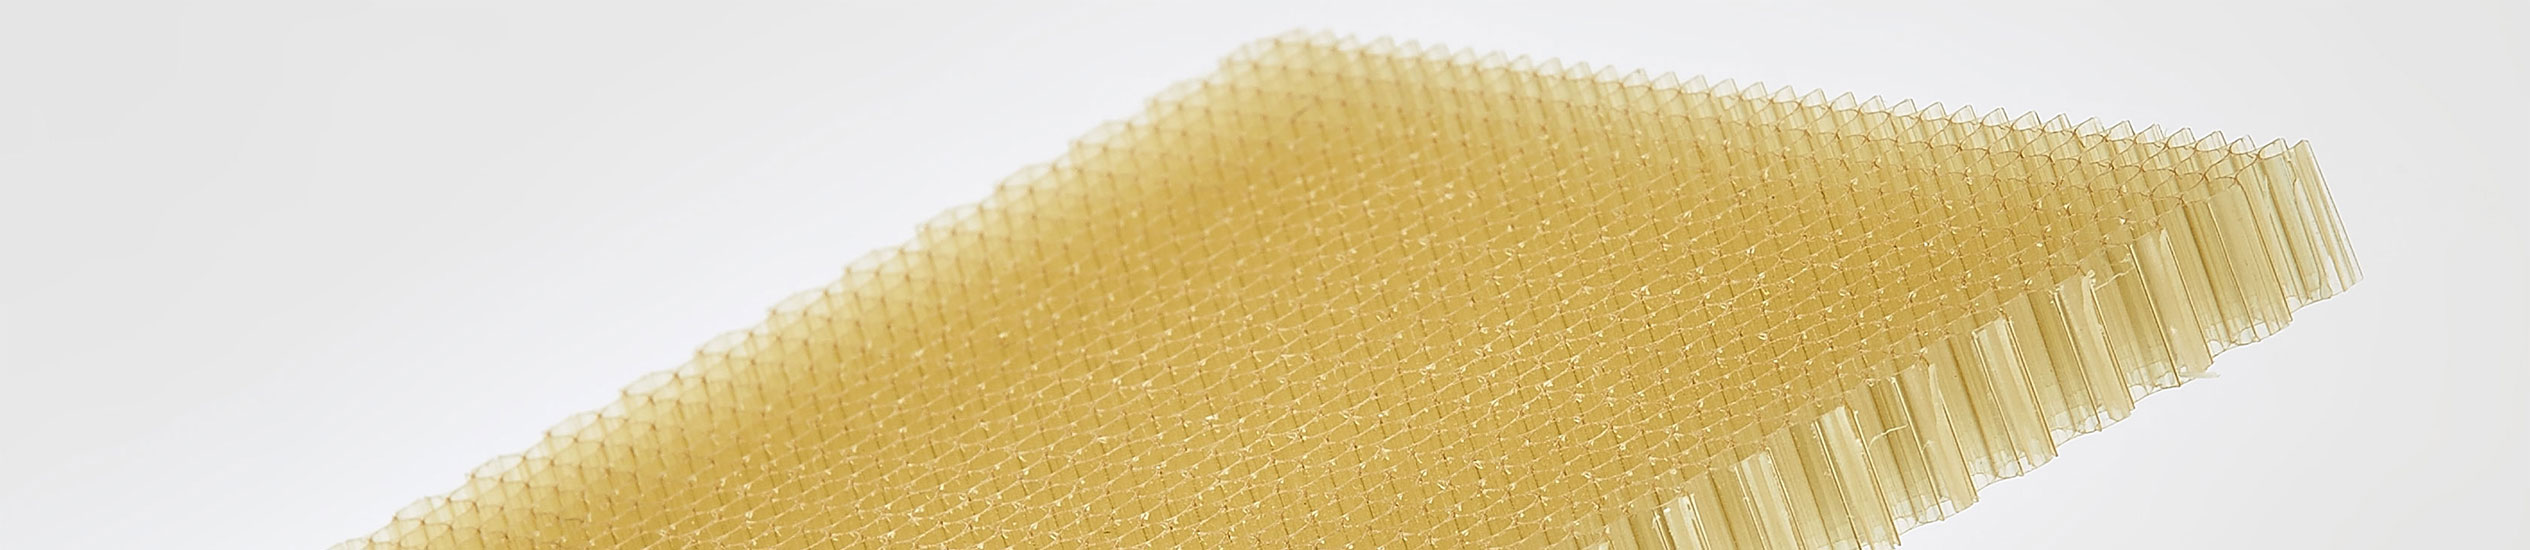 CEL COMPONENTS produces aluminum honeycombs , polycarbonate, polyetherimide and polypropylene honeycomb, foam PVC foams,  sandwich and composite panels